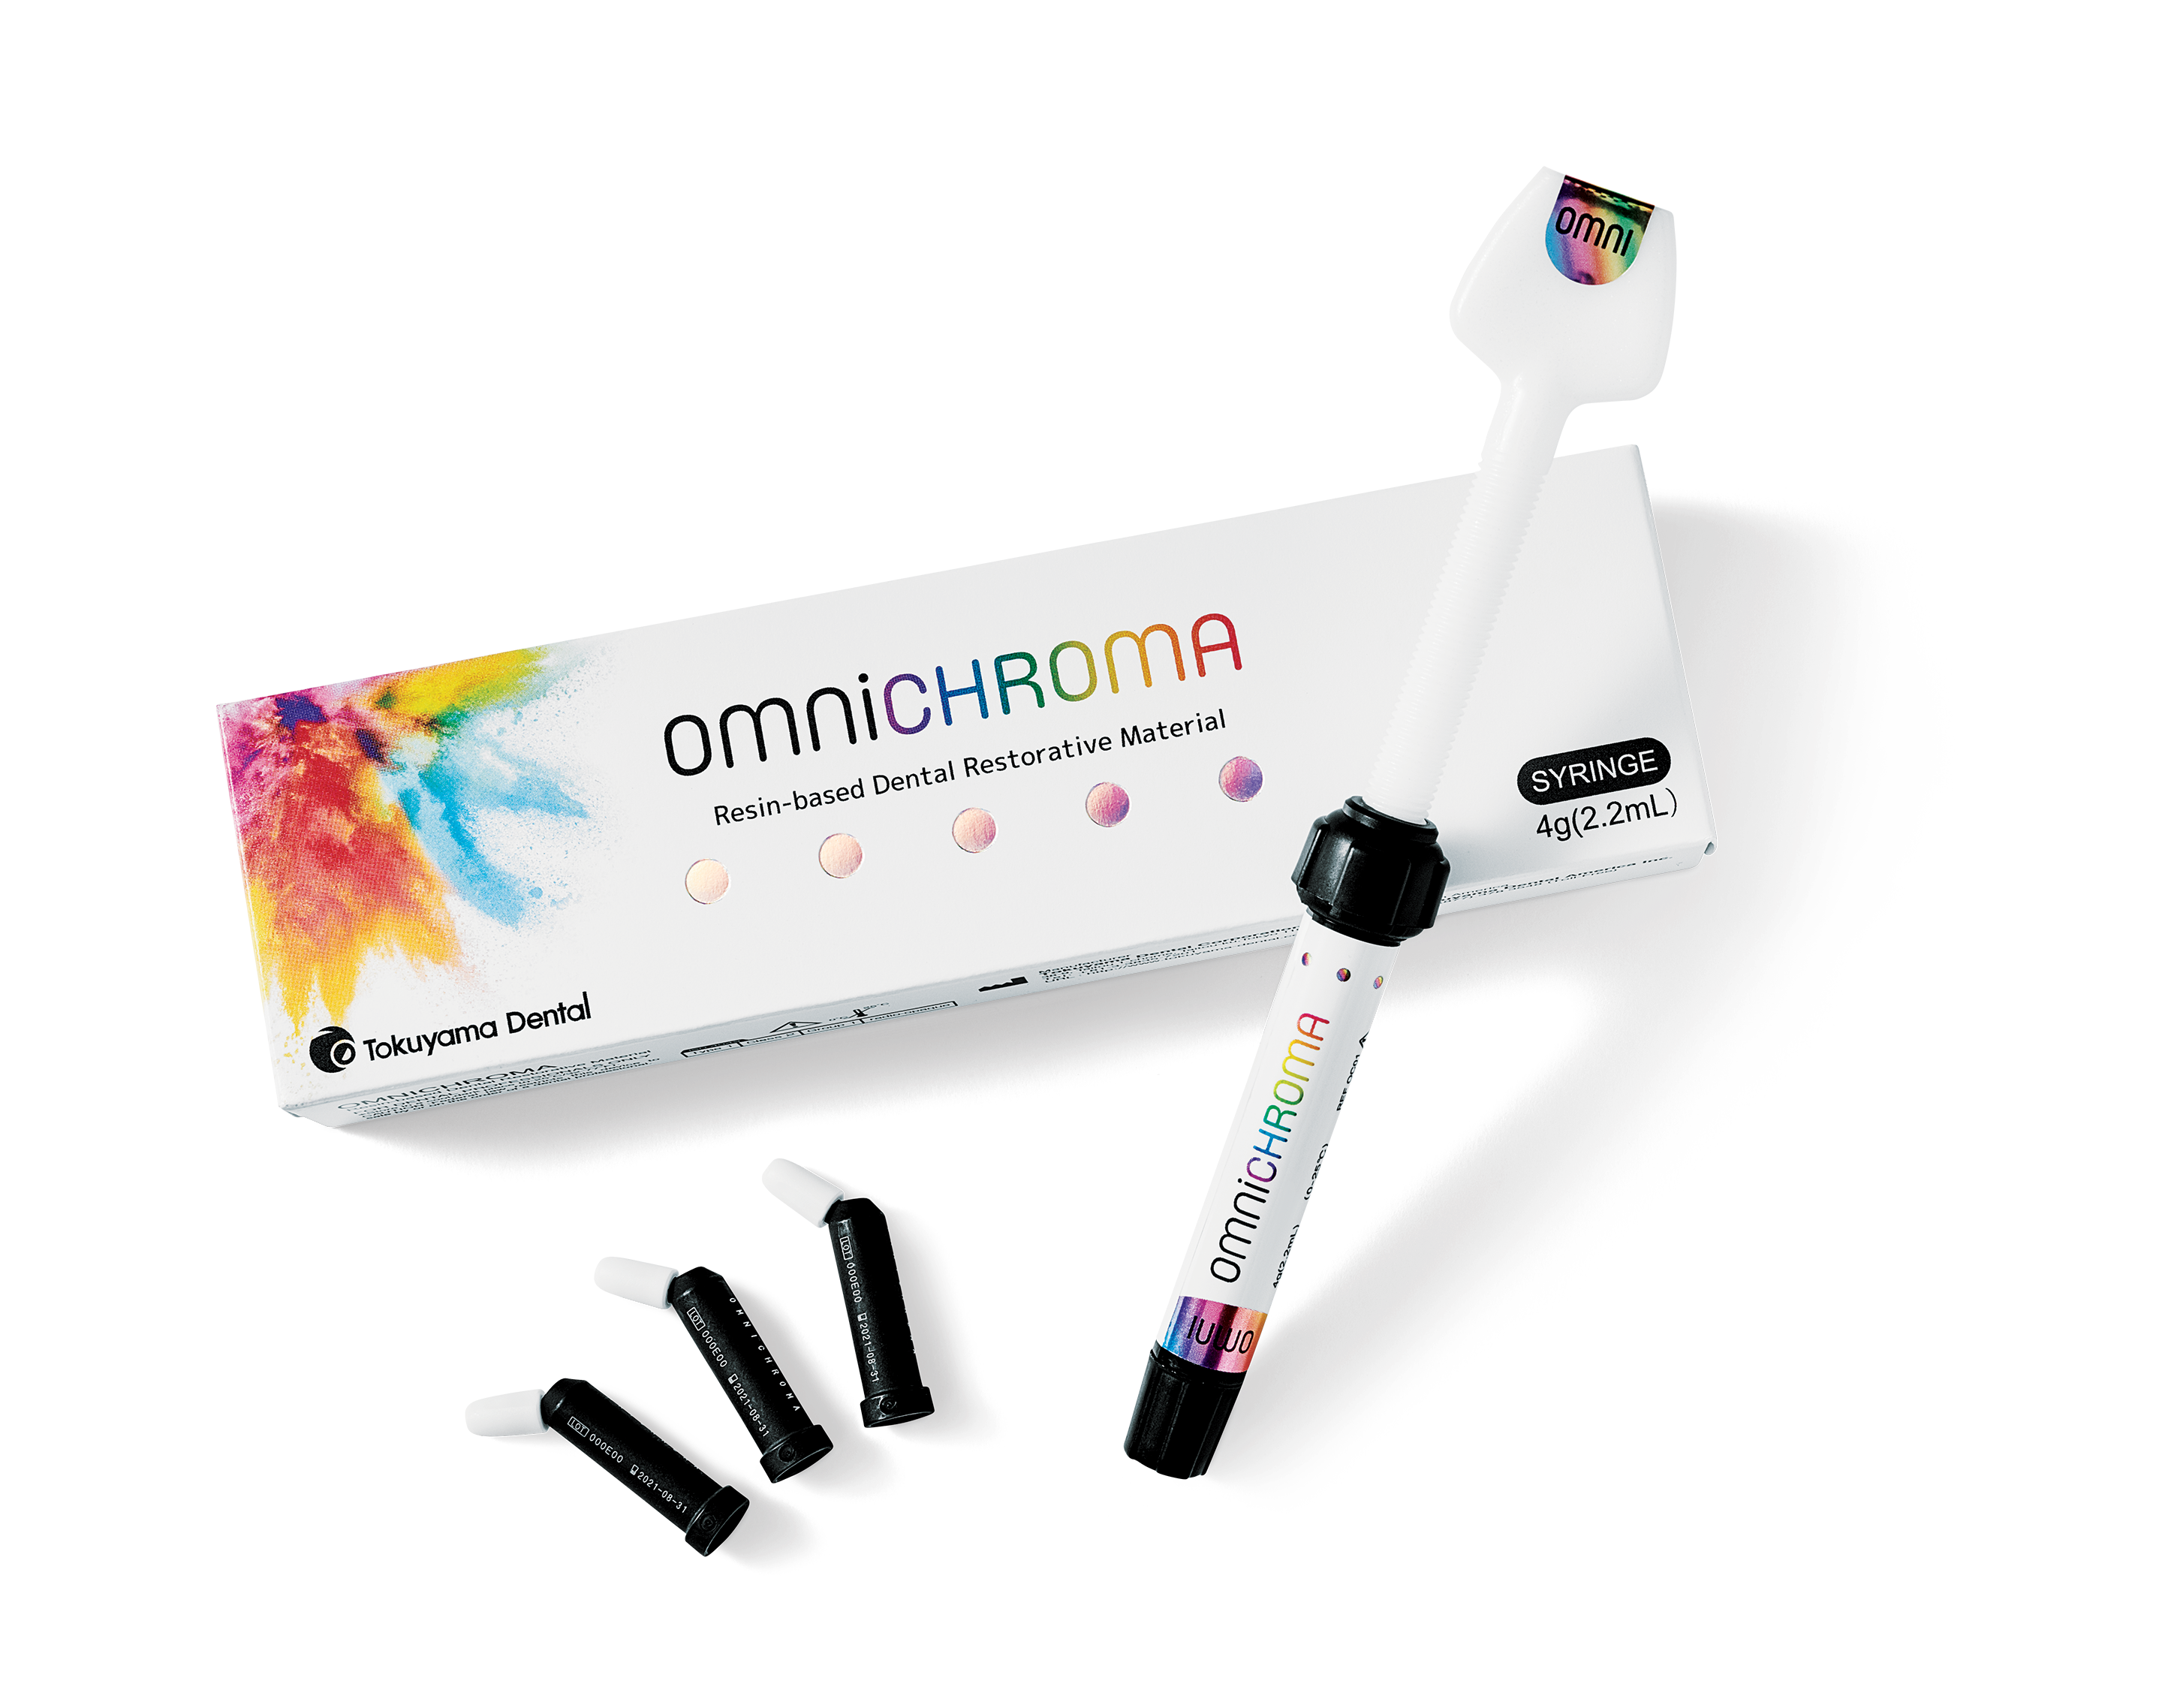 OMNICHROMA resin-based dental restorative material